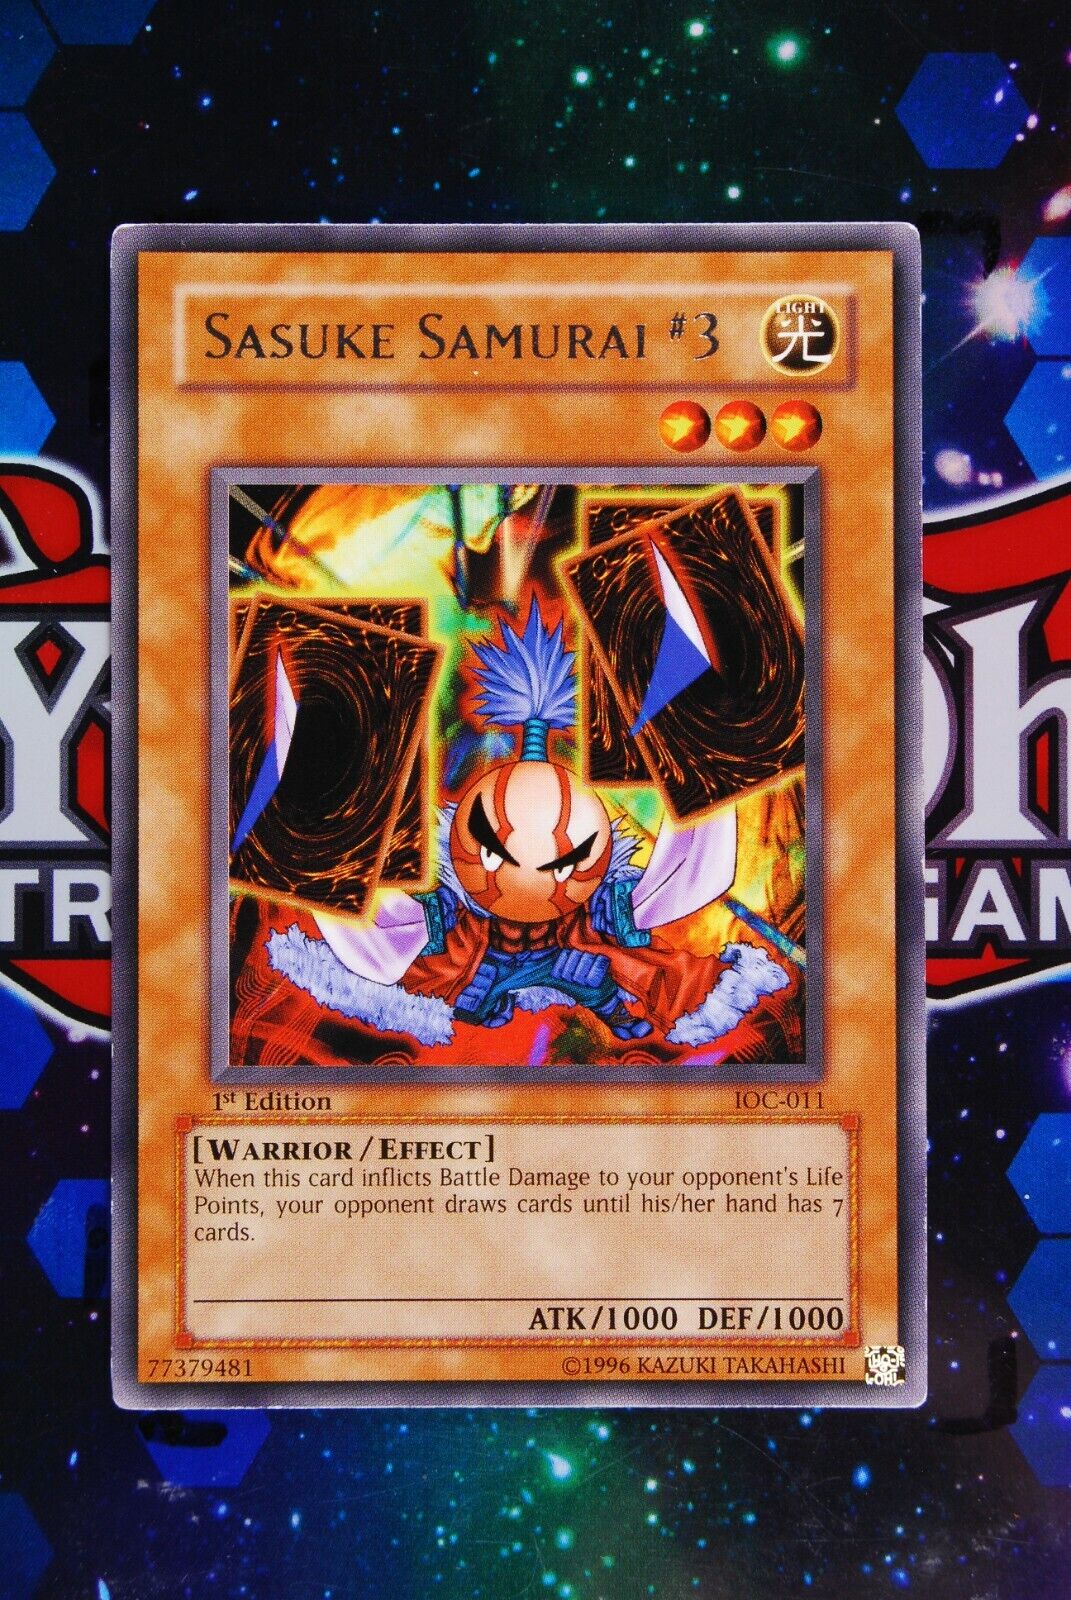 Sasuke Samurai #3 IOC-011 1st Edition Rare Yugioh Card